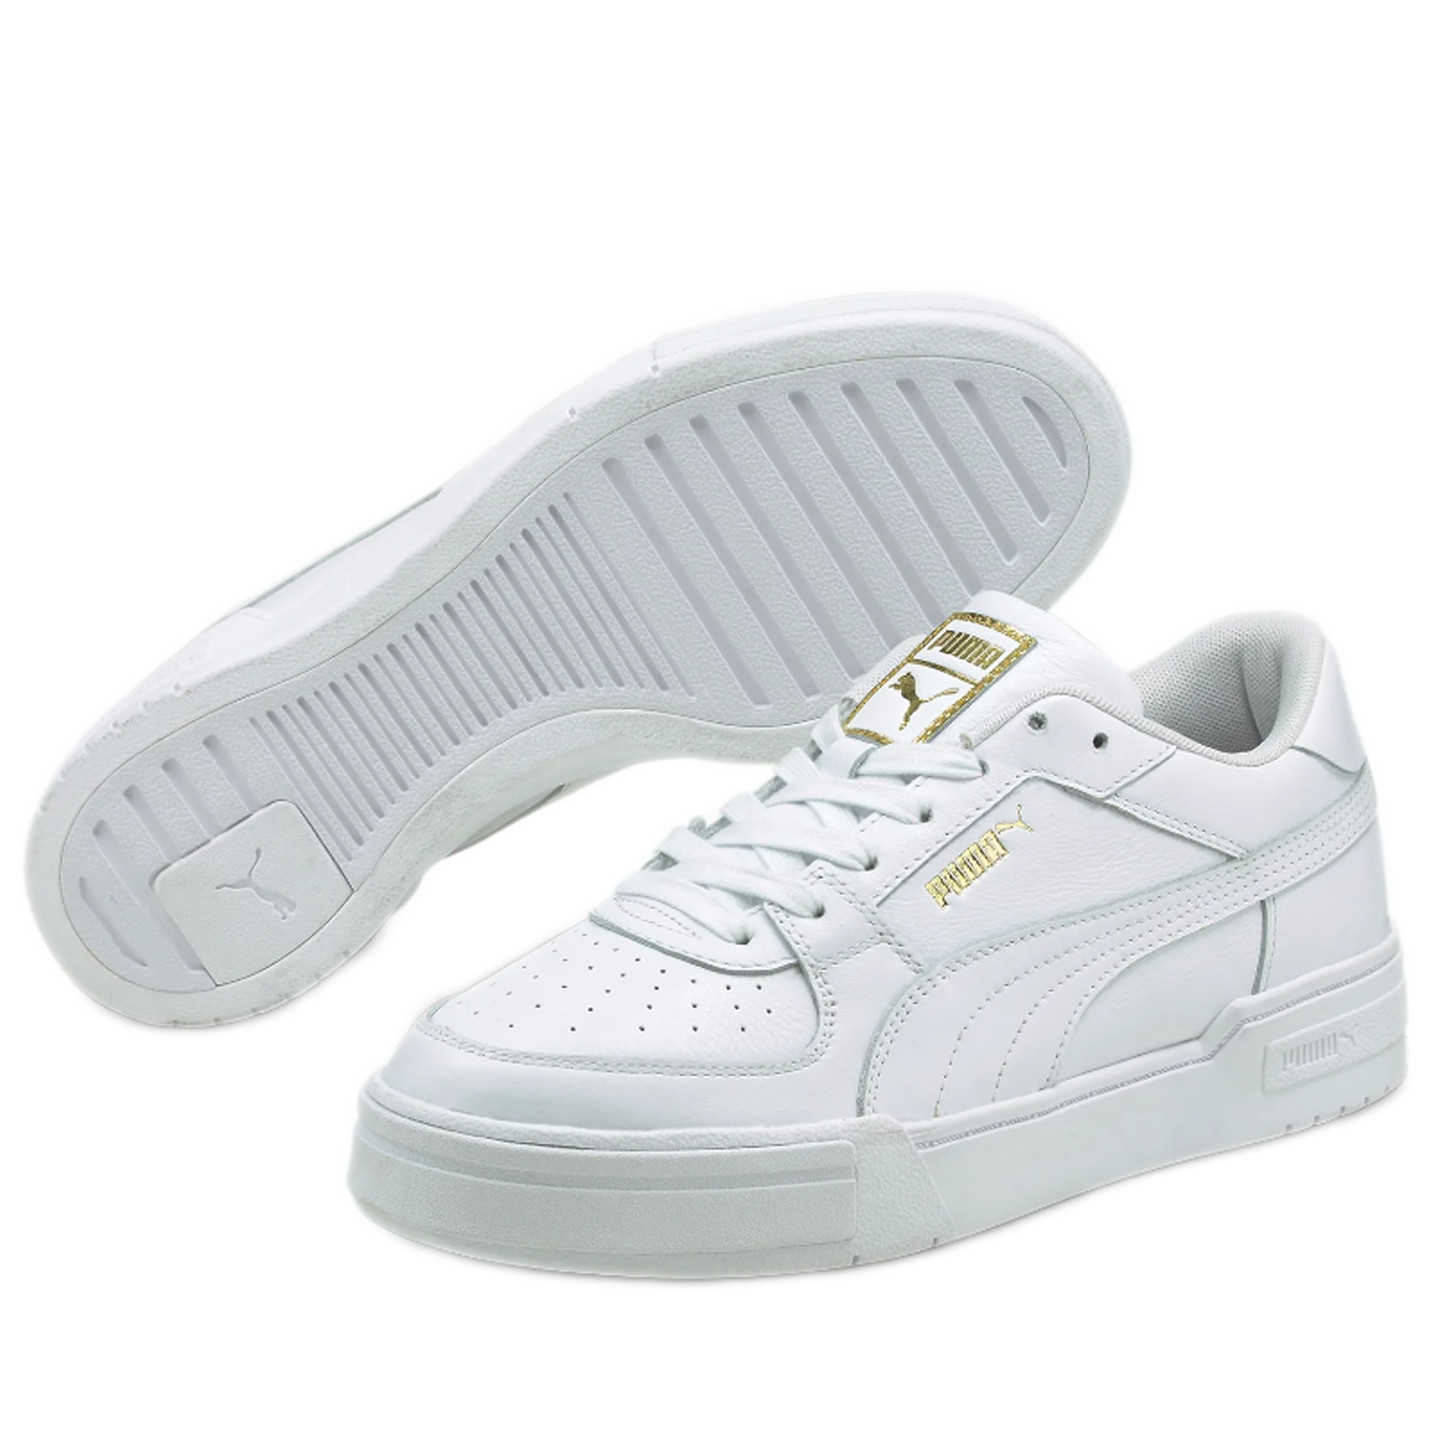 Kid's Puma CA Pro Classic Shoes - White